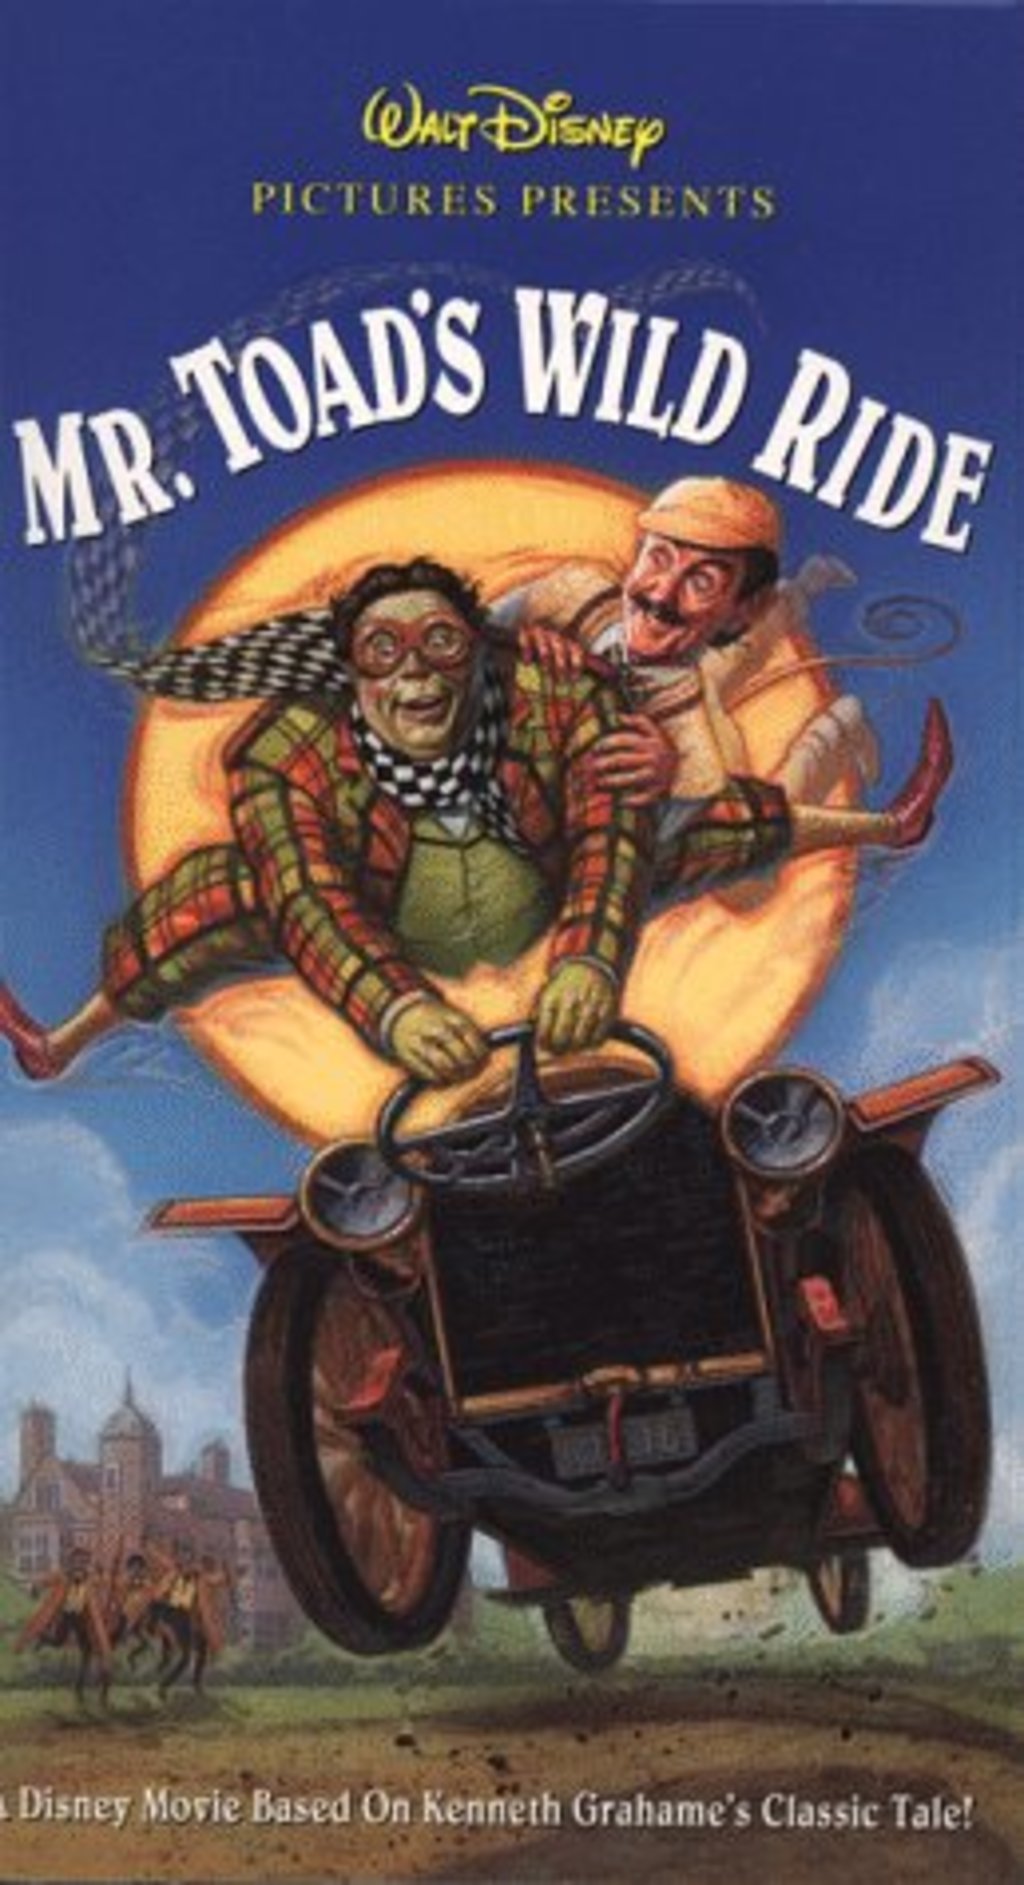 Watch Mr. Toad's Wild Ride on Netflix Today! | NetflixMovies.com1024 x 1885